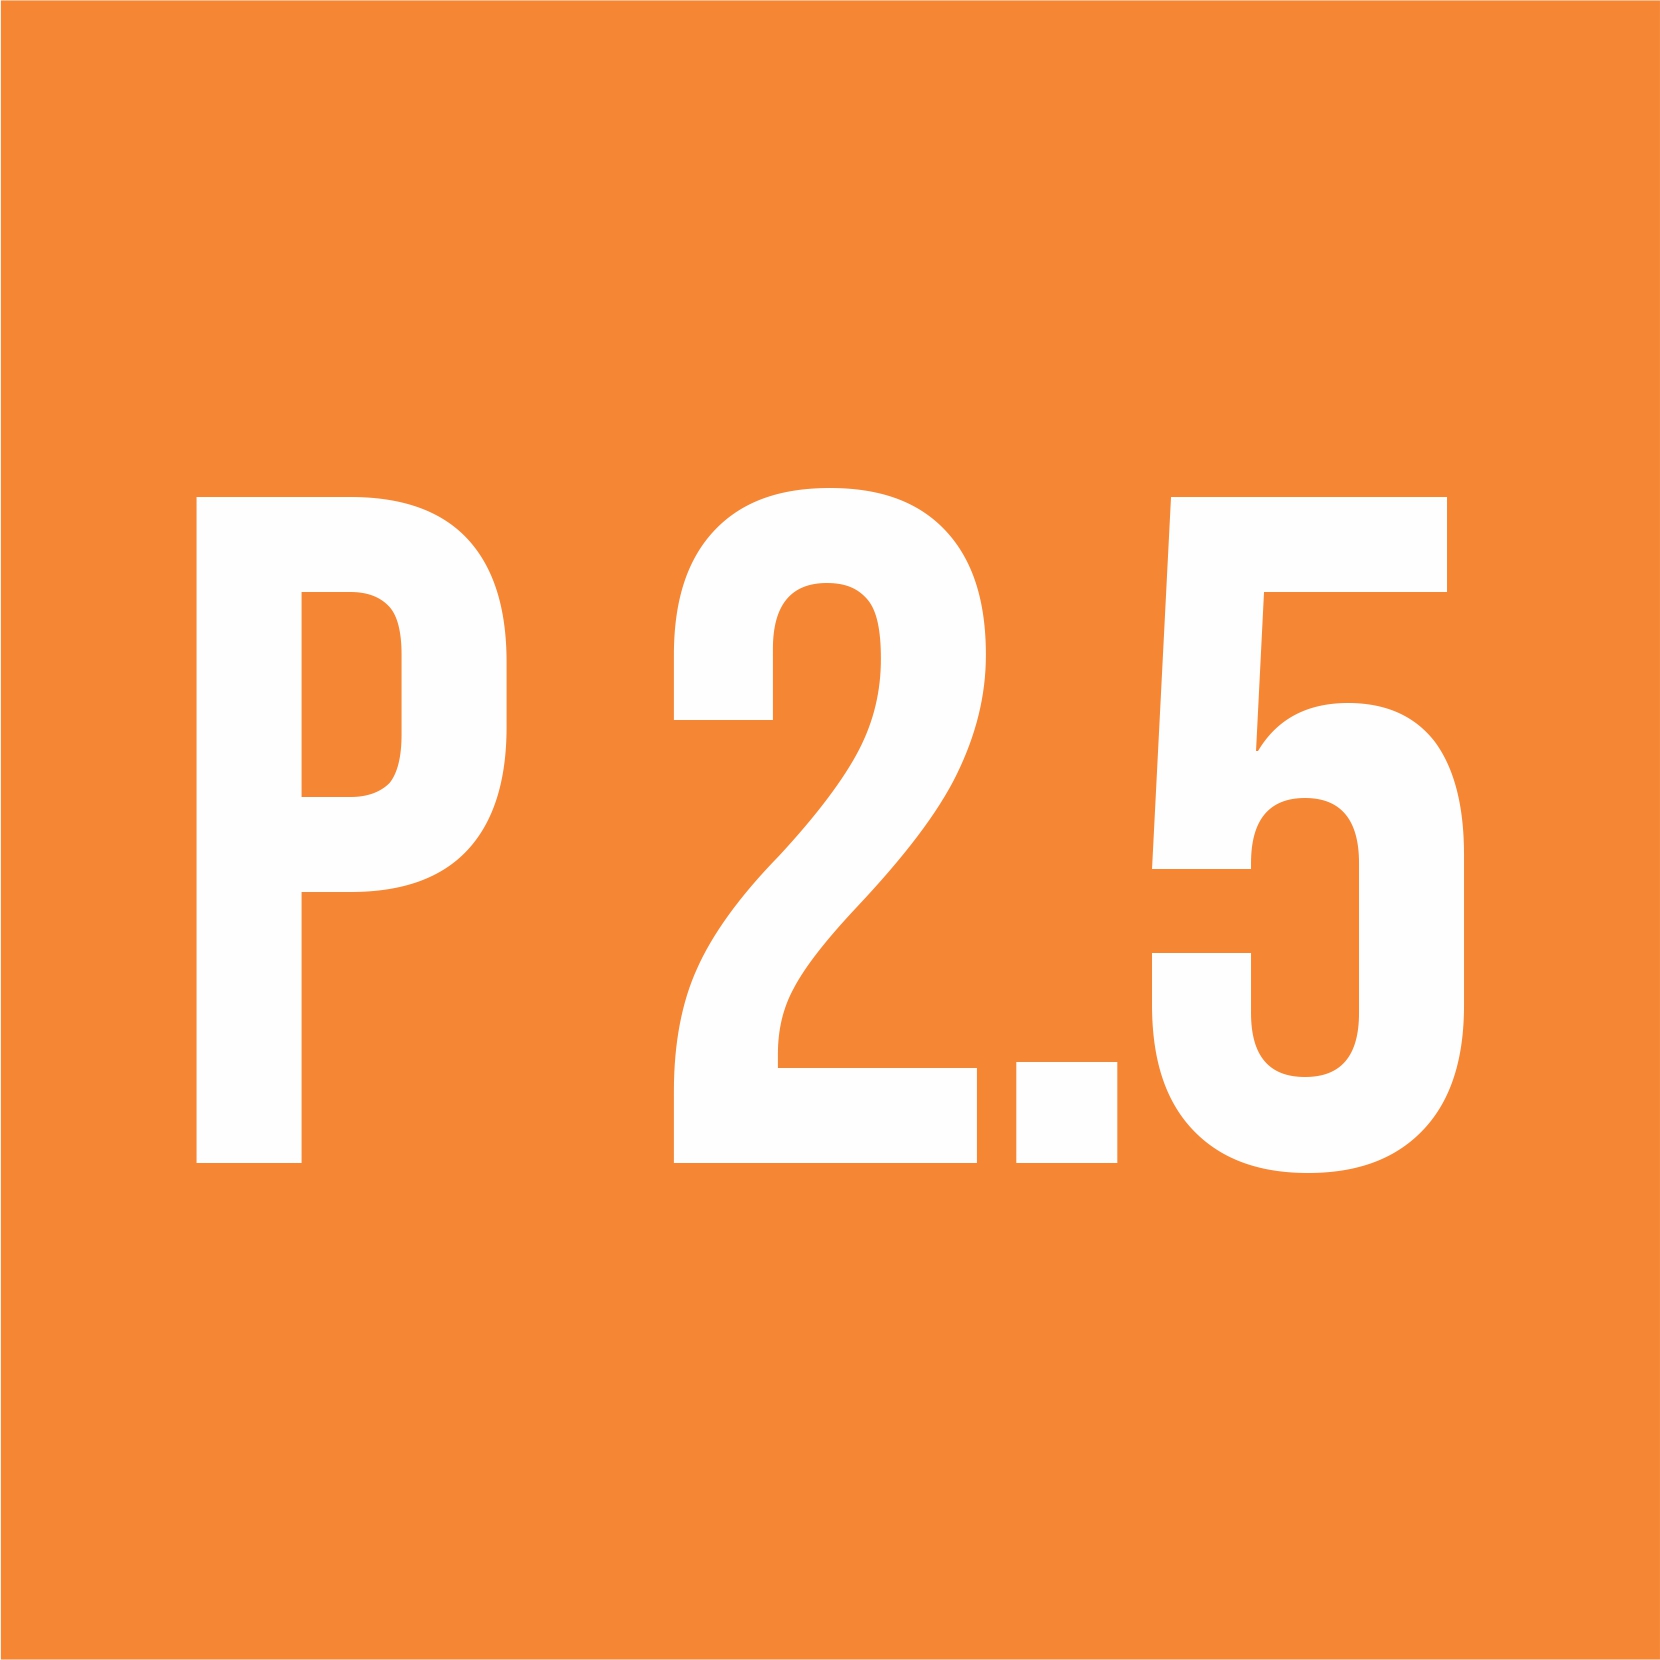 pp - Logotipo P 2.5